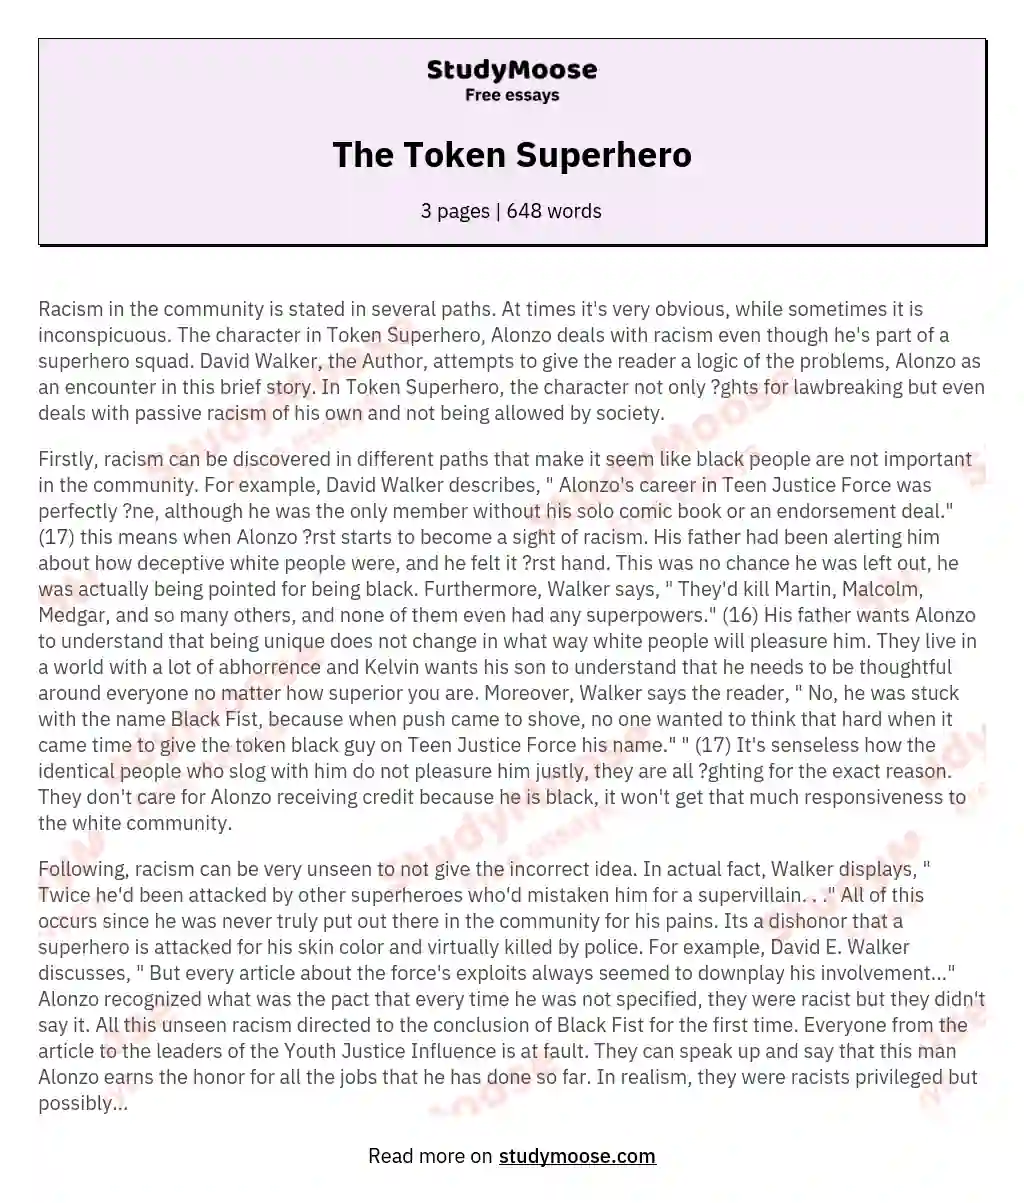 The Token Superhero essay